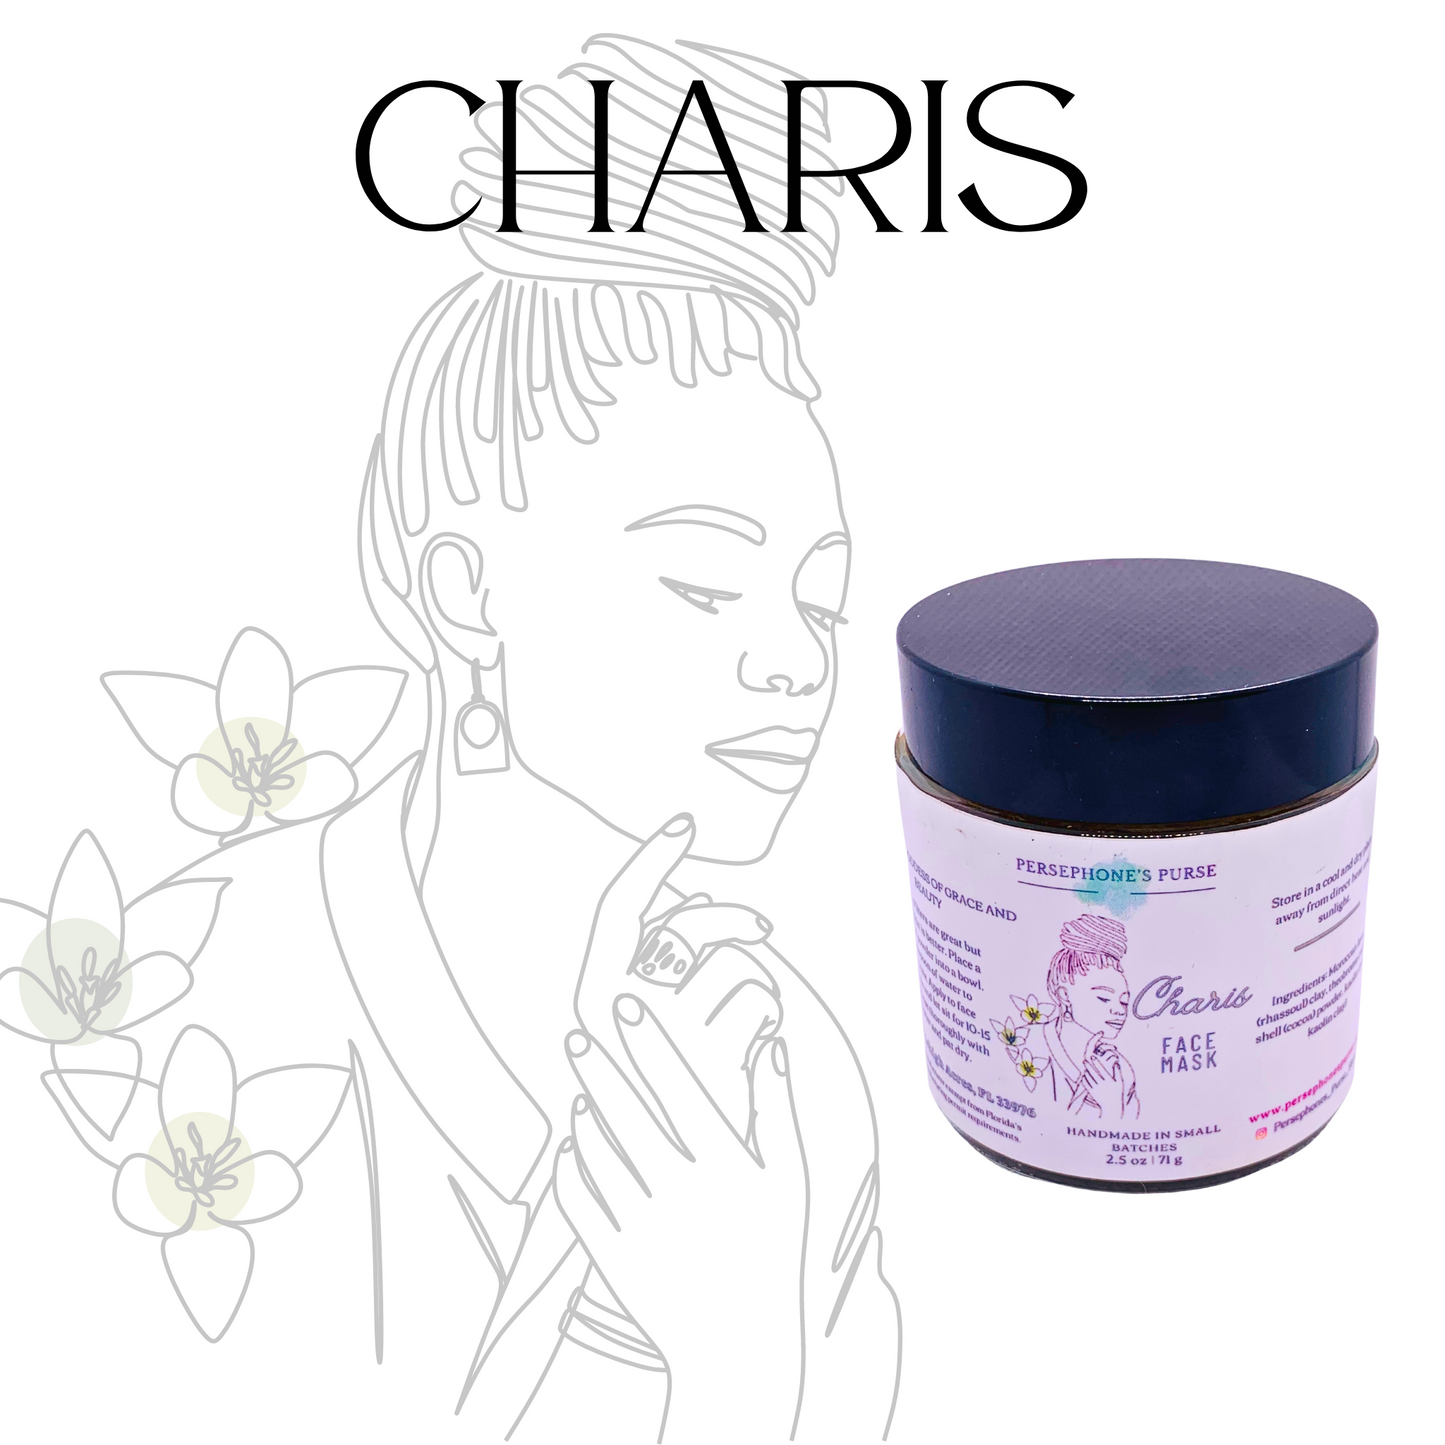 Charis Detoxifying Face Mask 2.5 oz. - Persephone's Purse